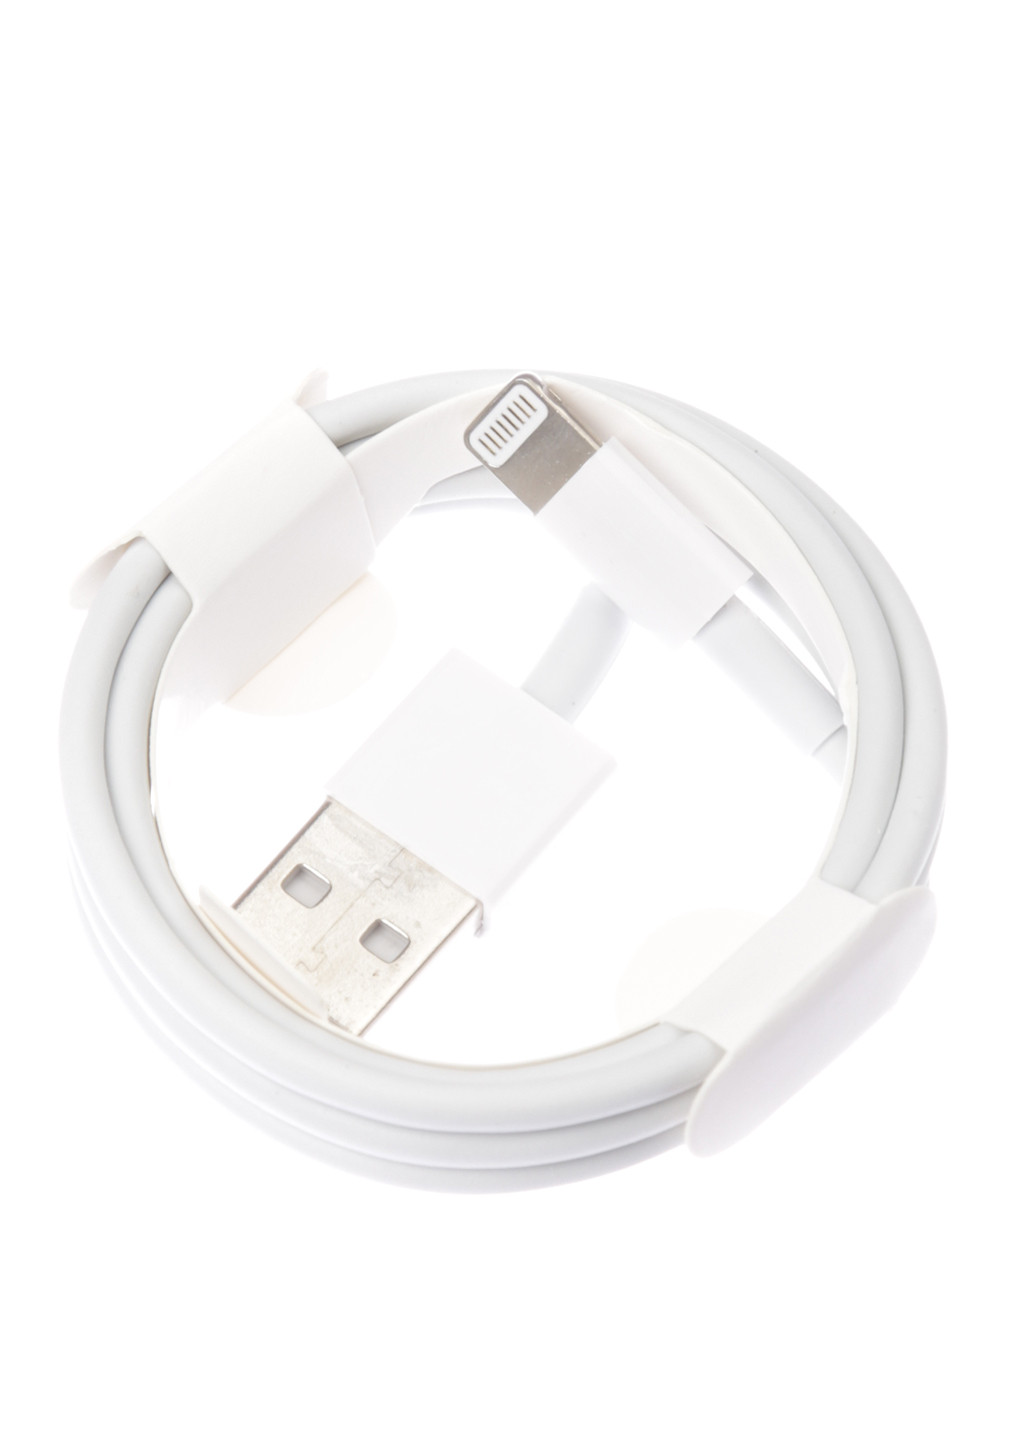 USB кабель для Iphone, 1 м No Brand (92965354)